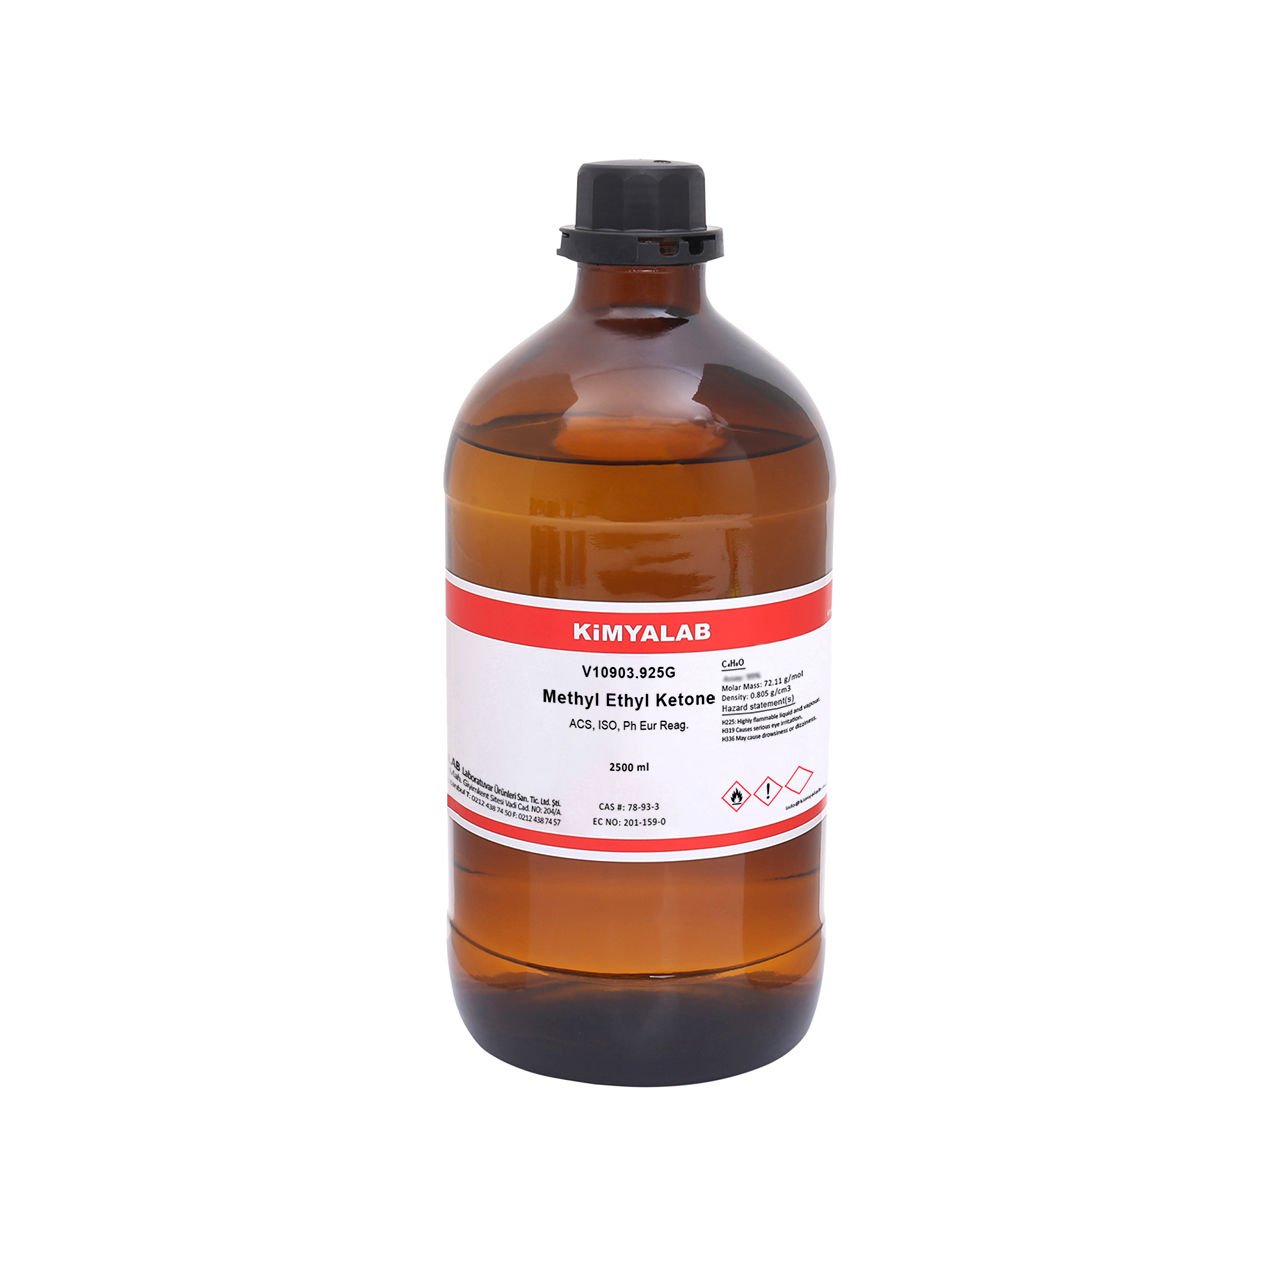 Kimyalab Metil Etil Keton 2,5L - Methyl Ethyl Ketone %99,9